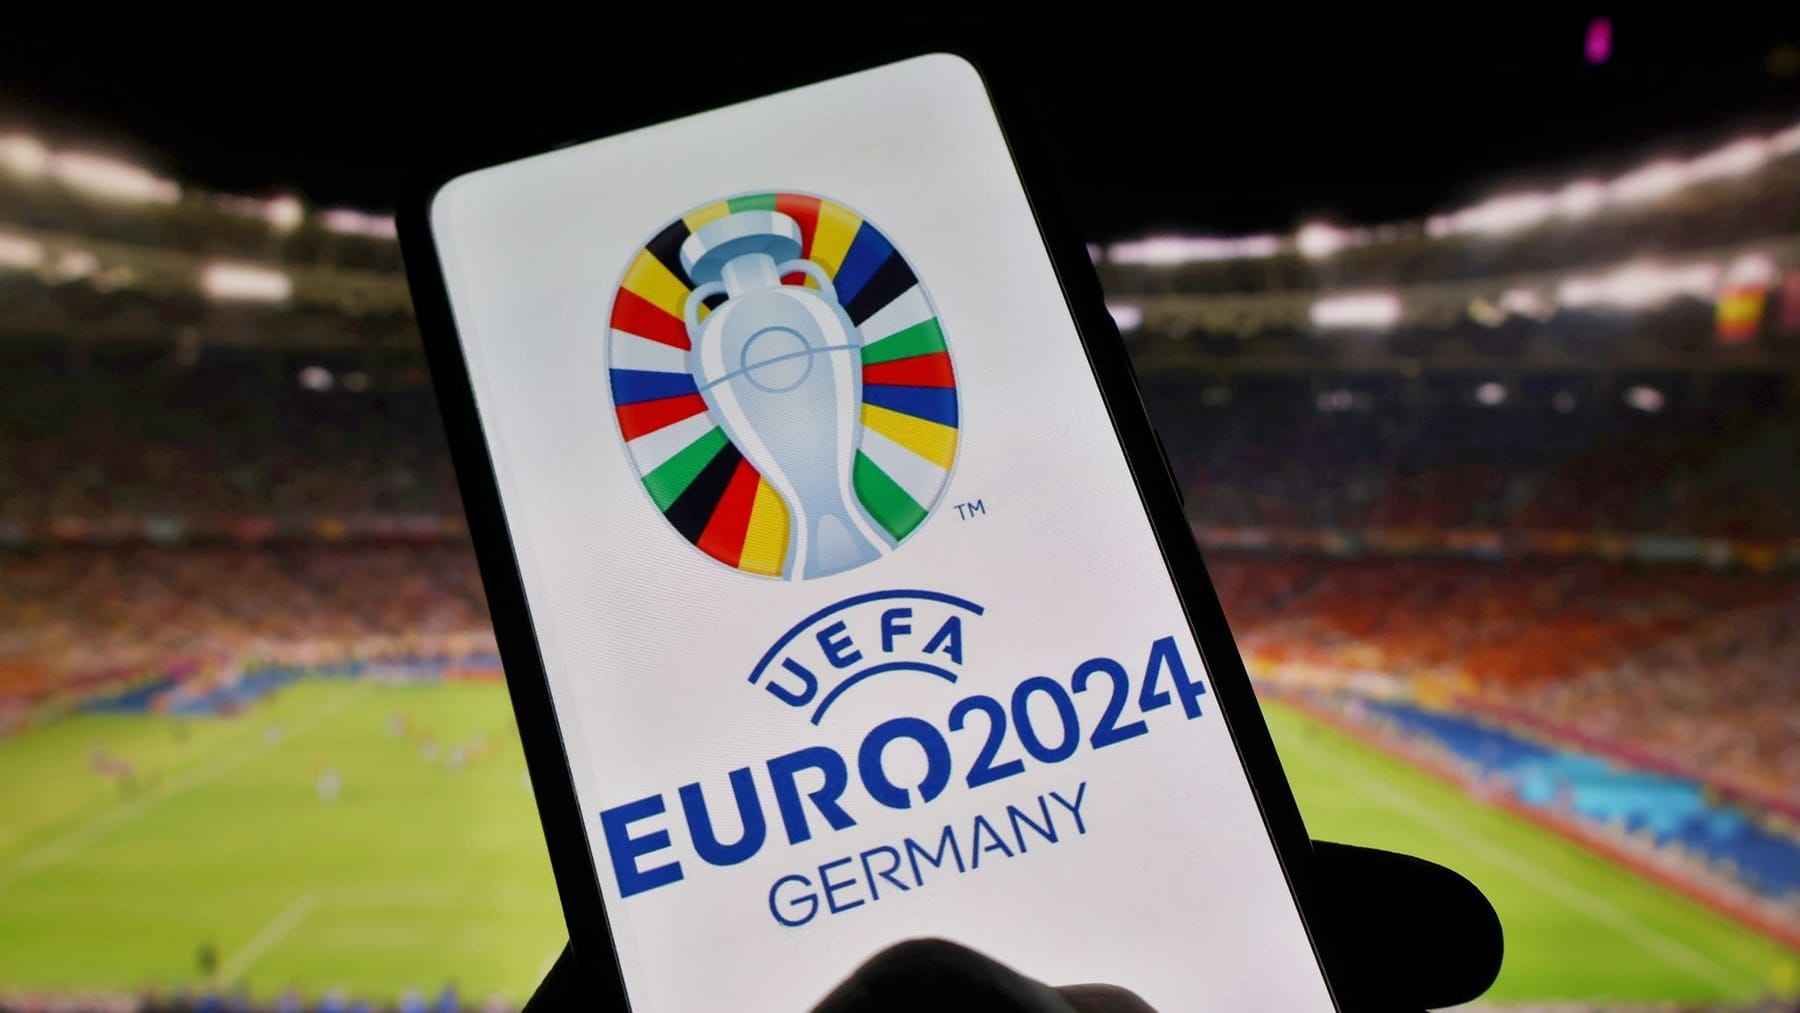 EM 2024: Ansturm auf Uefa-Ticketplattform – Fans frustriert wegen Panne